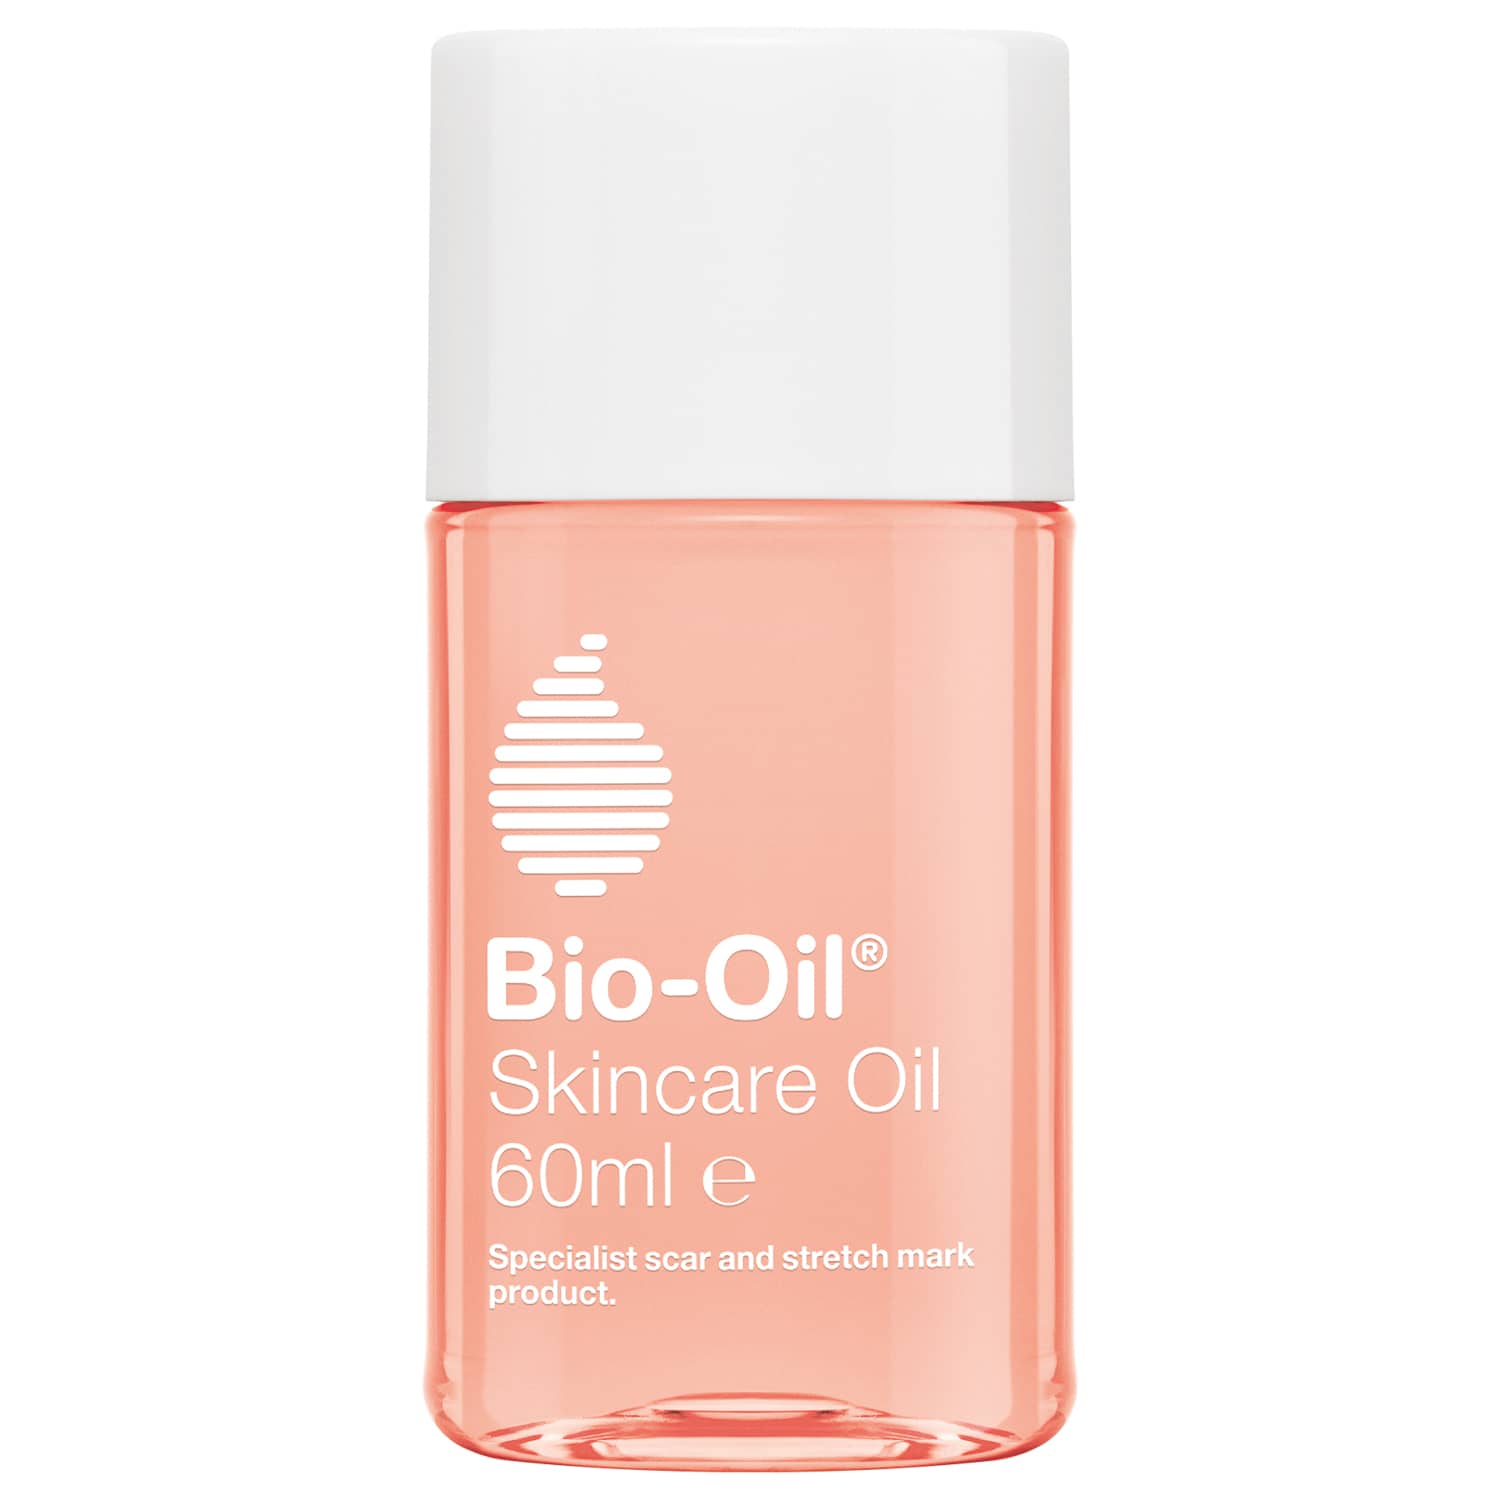 Bio-Oil Specialist Skincare Oil Acne Marks 60ml - Makeup Stash Pakistan - Bio-Oil